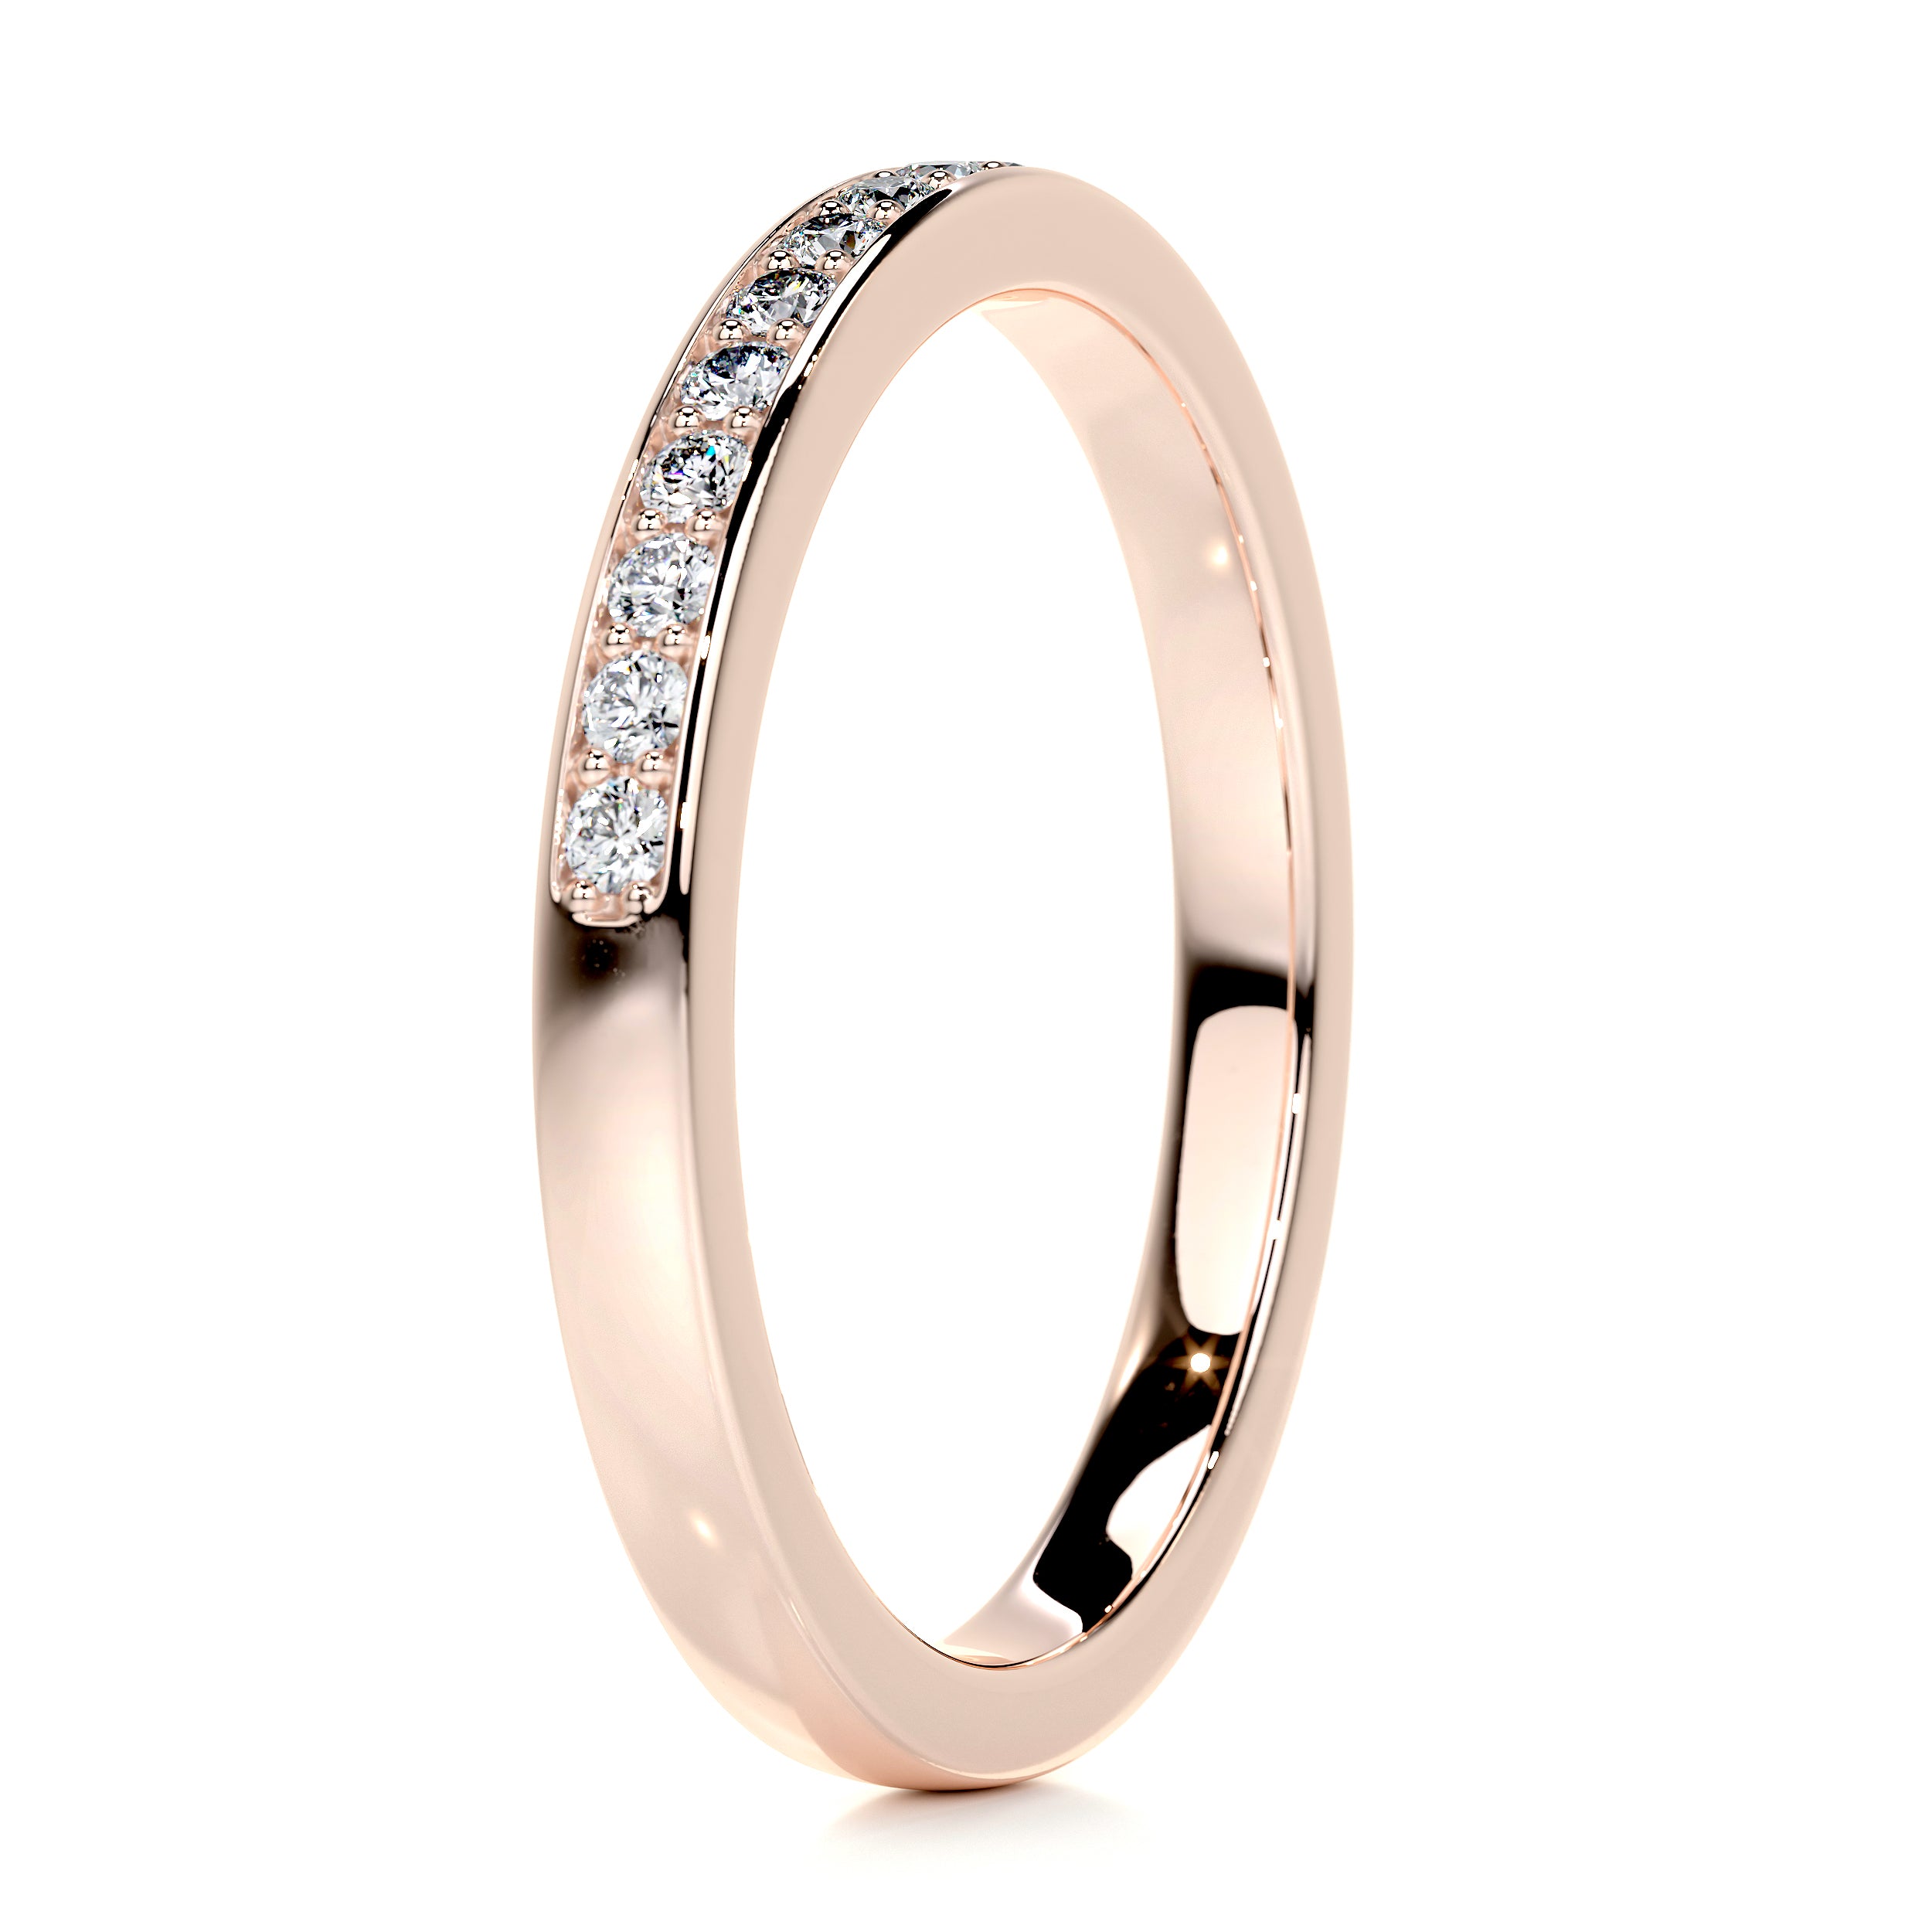 Giselle Diamond Wedding Ring   (0.2 Carat) -14K Rose Gold